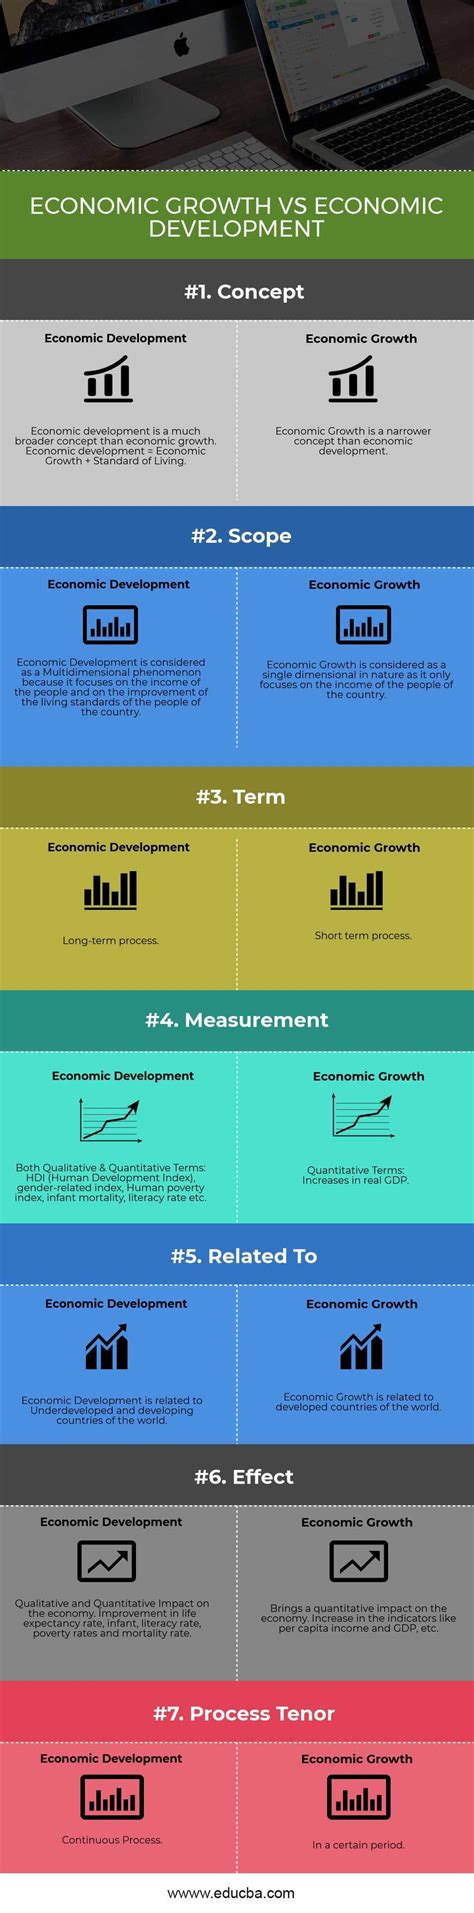 economic growth  economic development   differences